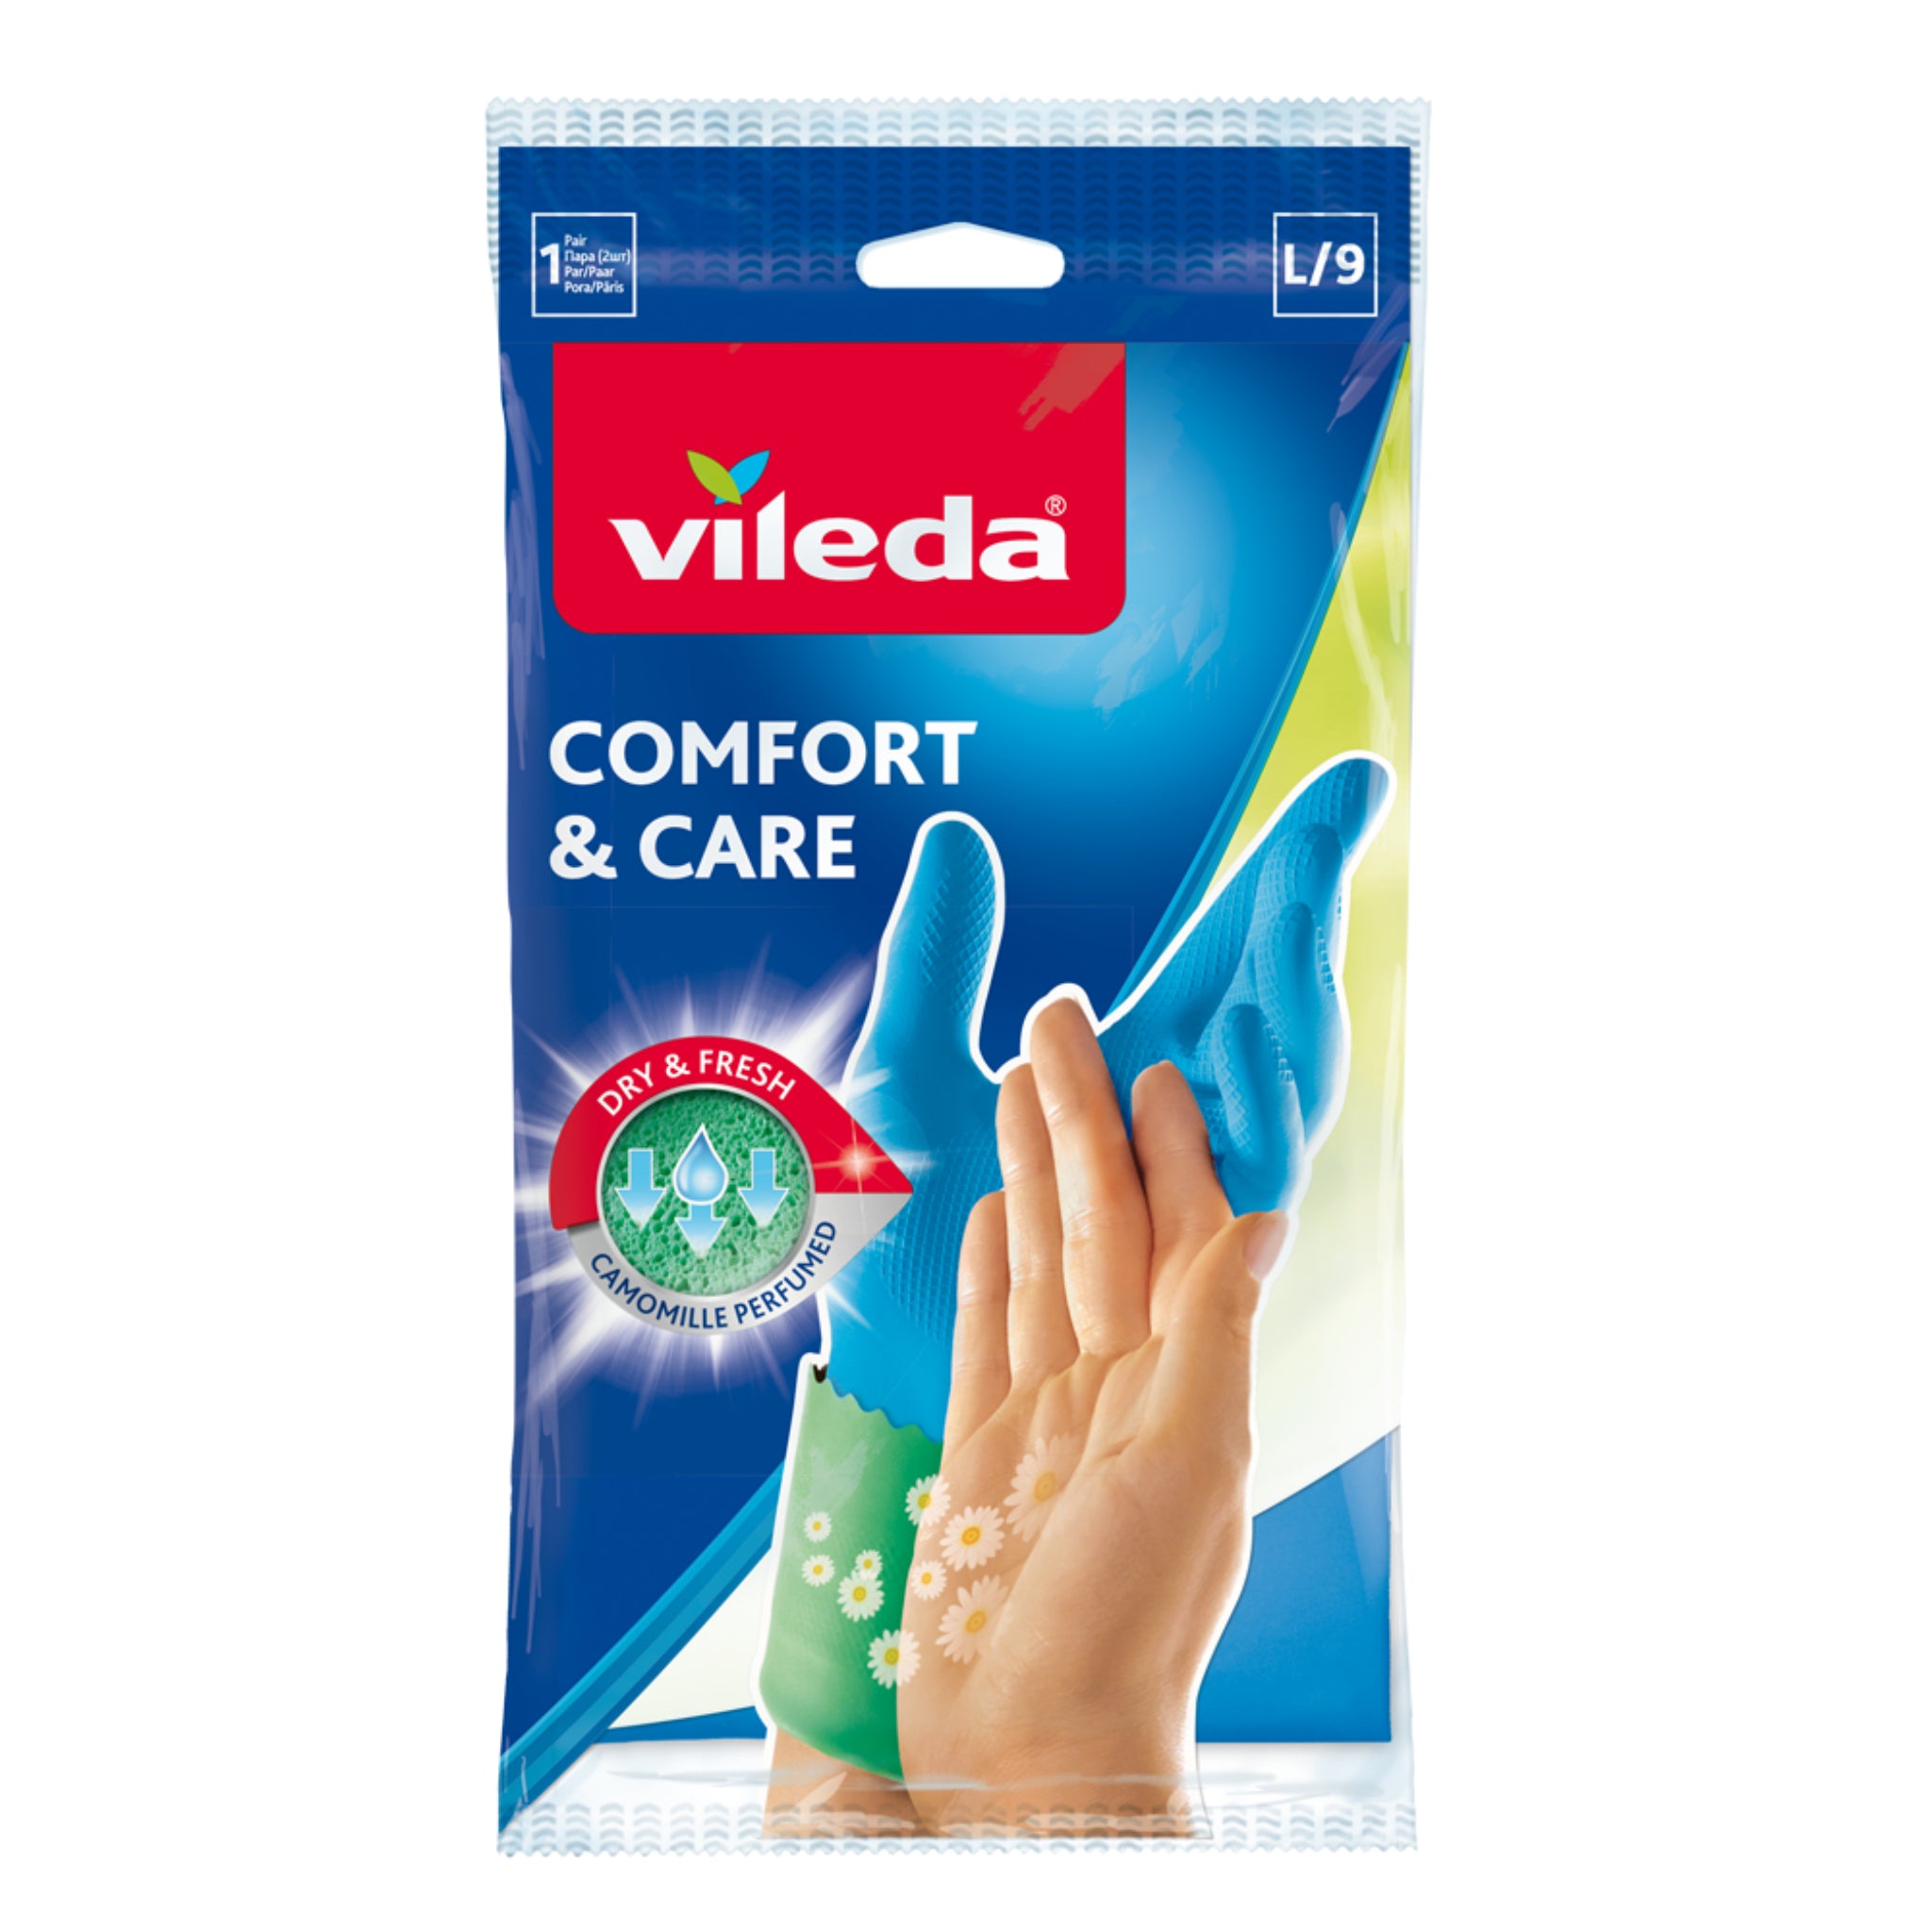 Vileda Comfort & Care Glove (Large) VA0020, 9 pieces, cleaning accessories